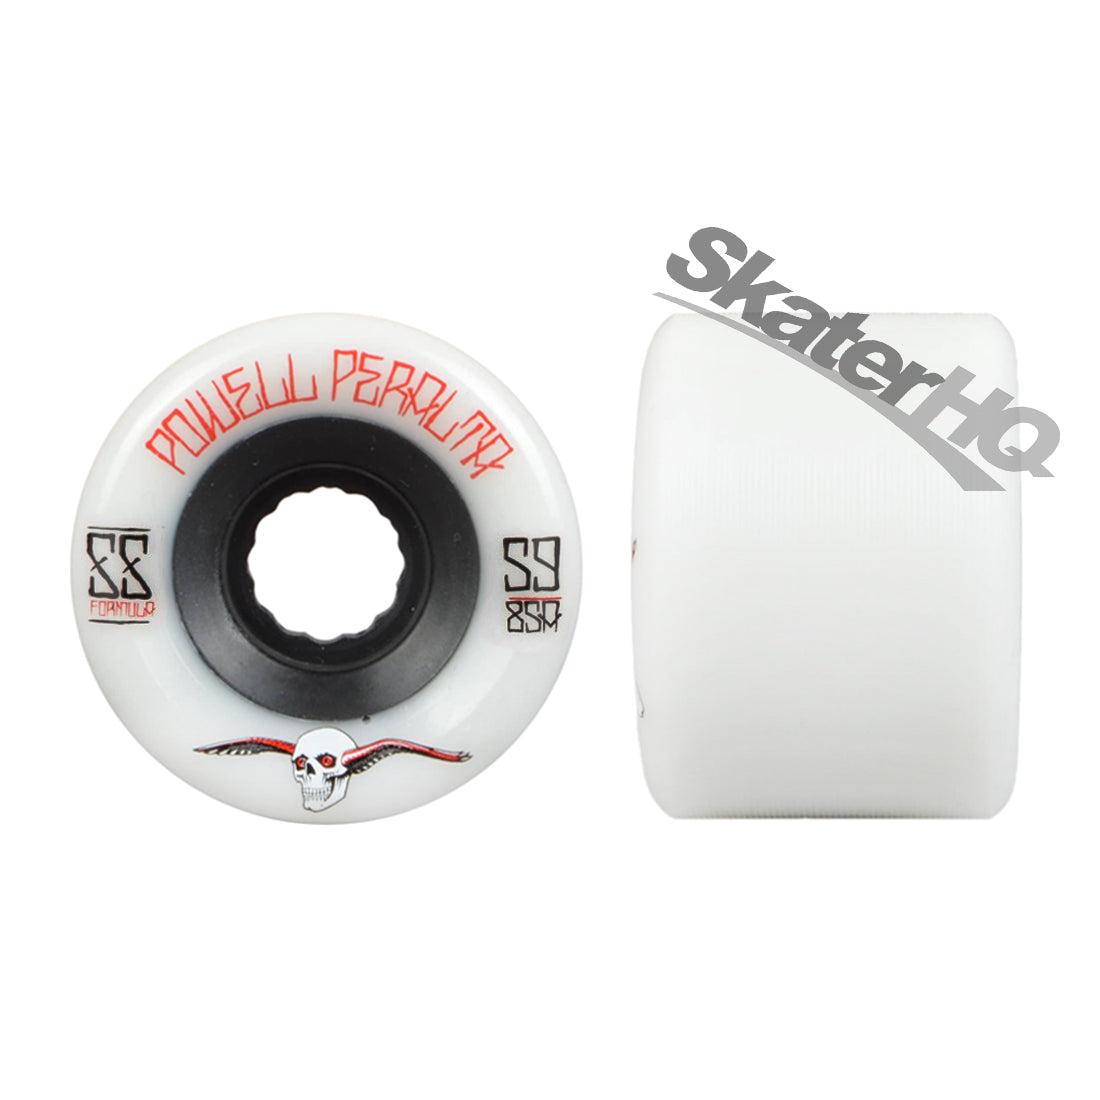 Powell Peralta SSF G-Slides 59mm 85a - White Skateboard Wheels